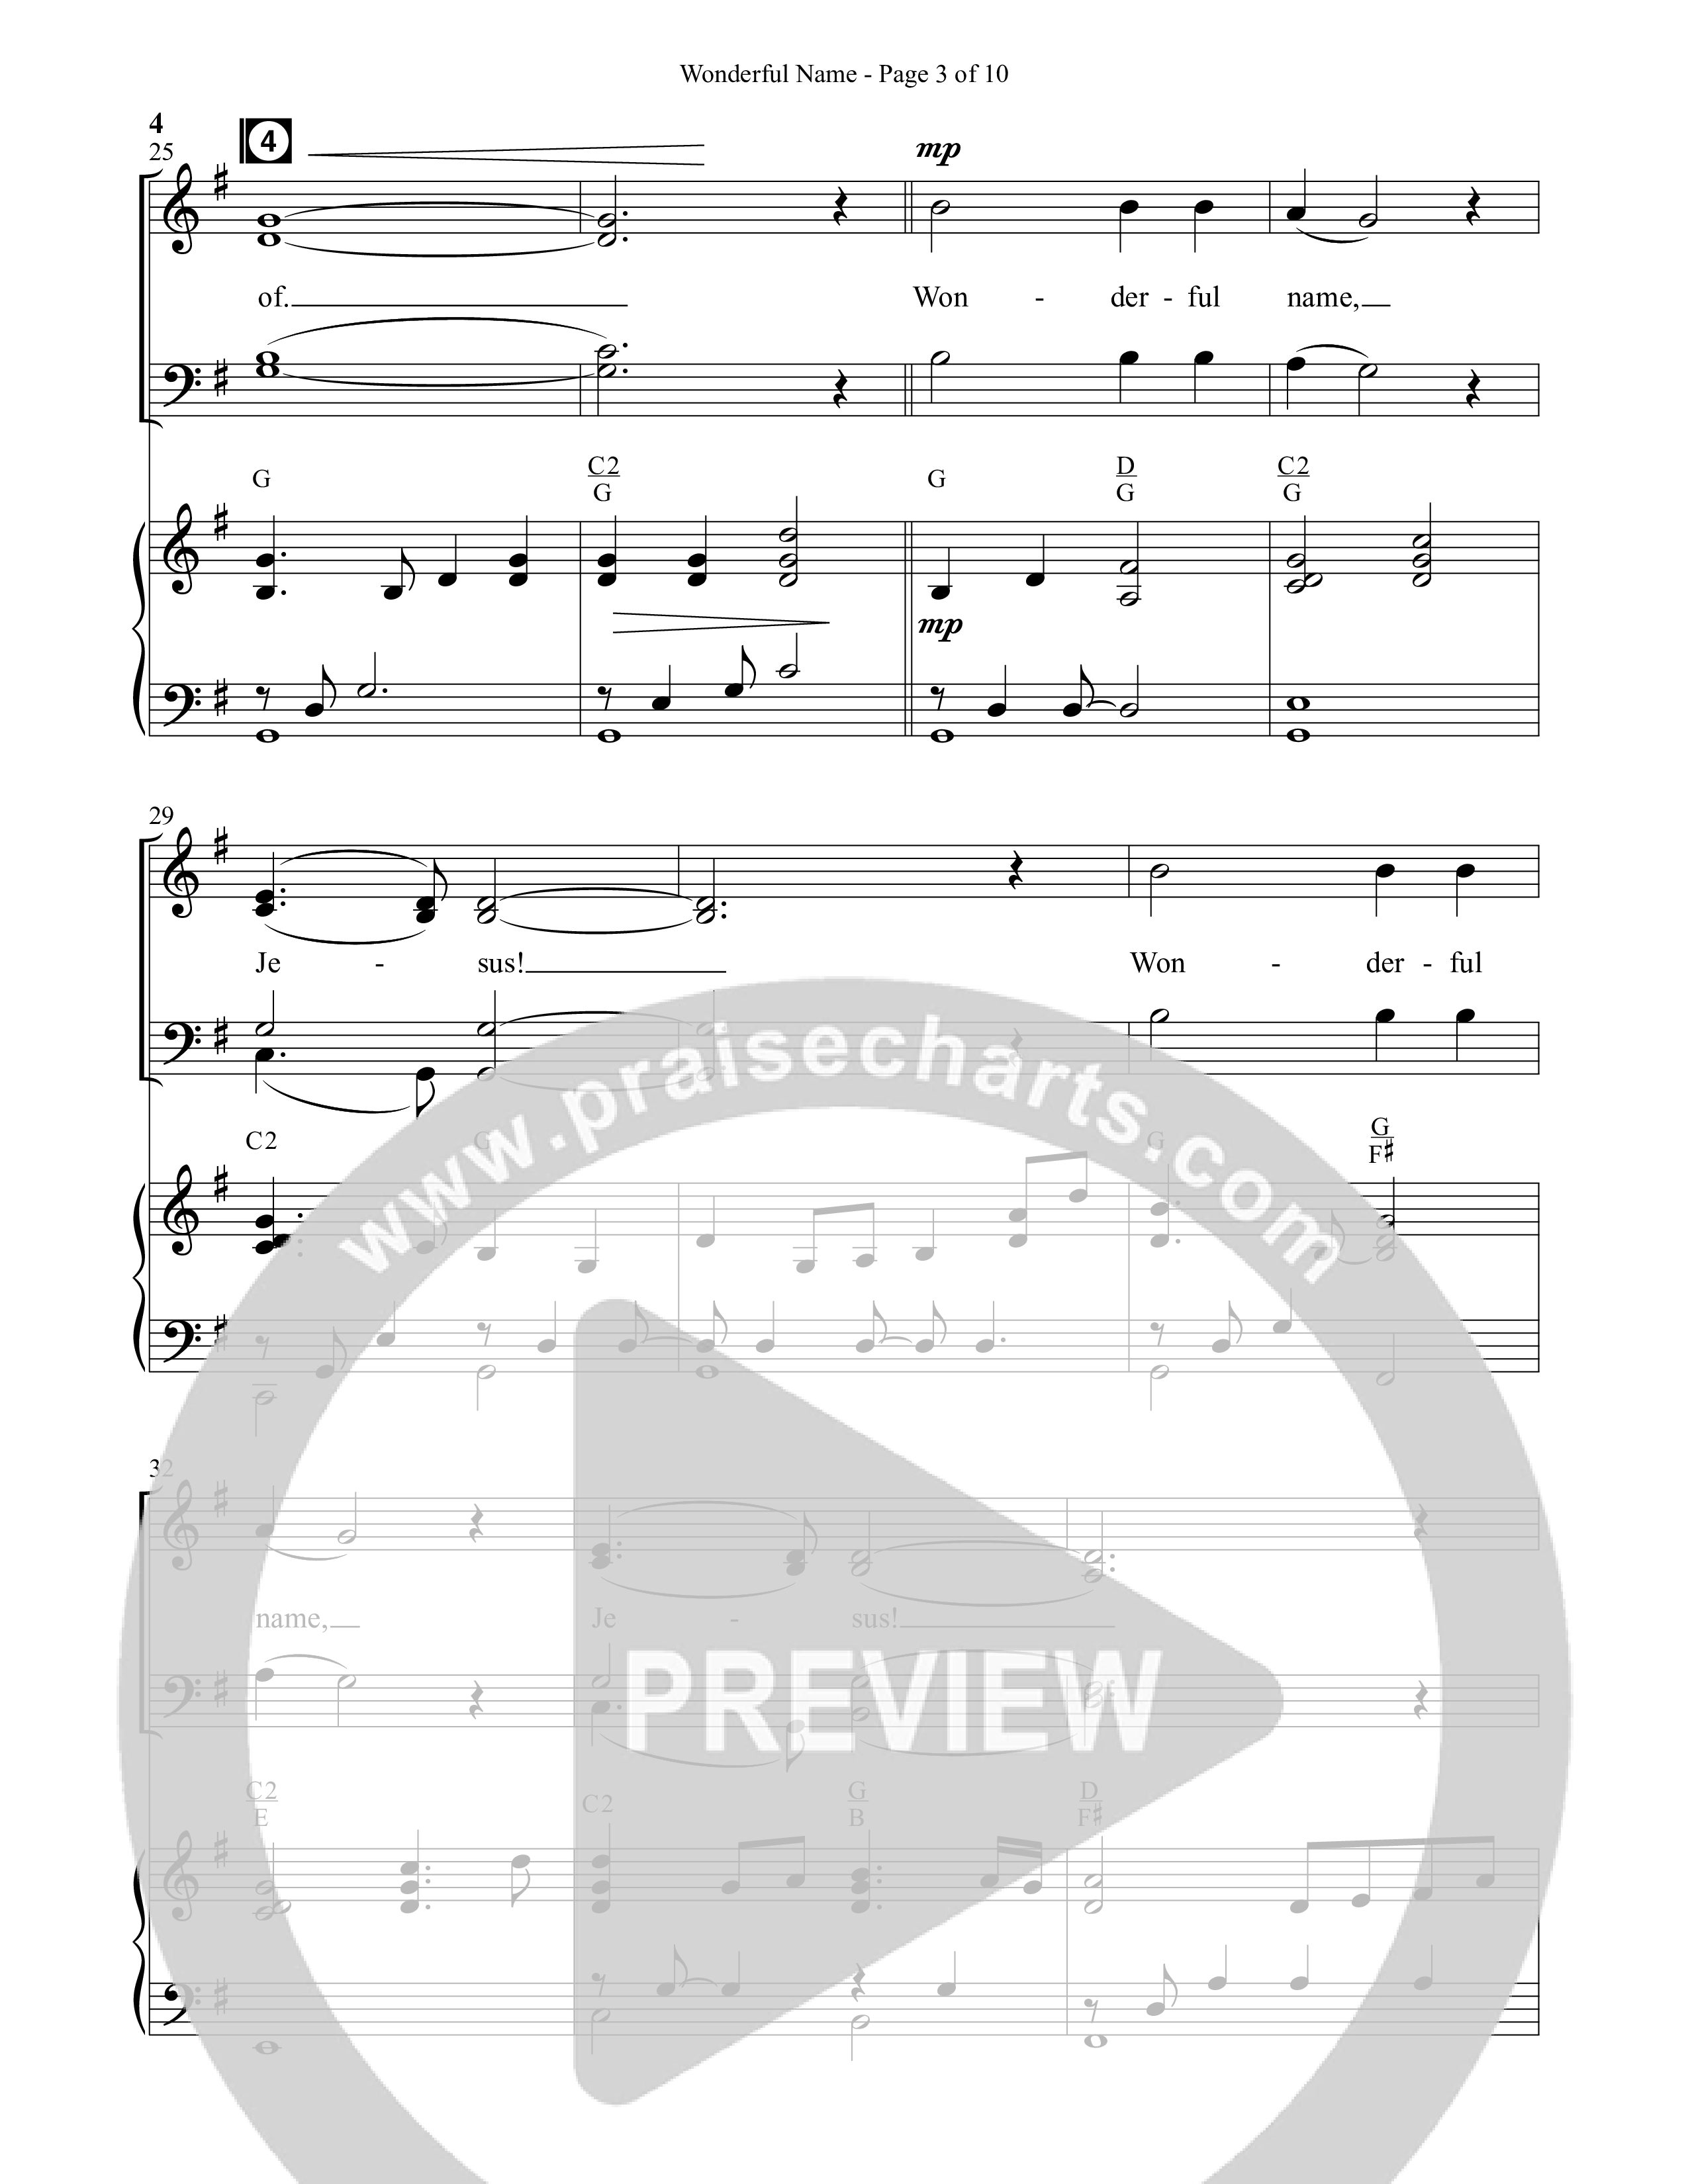 Wonderful Name (Choral Anthem SATB) Anthem (SATB/Piano) (Semsen Music / Arr. John Bolin / Orch. Cliff Duren)